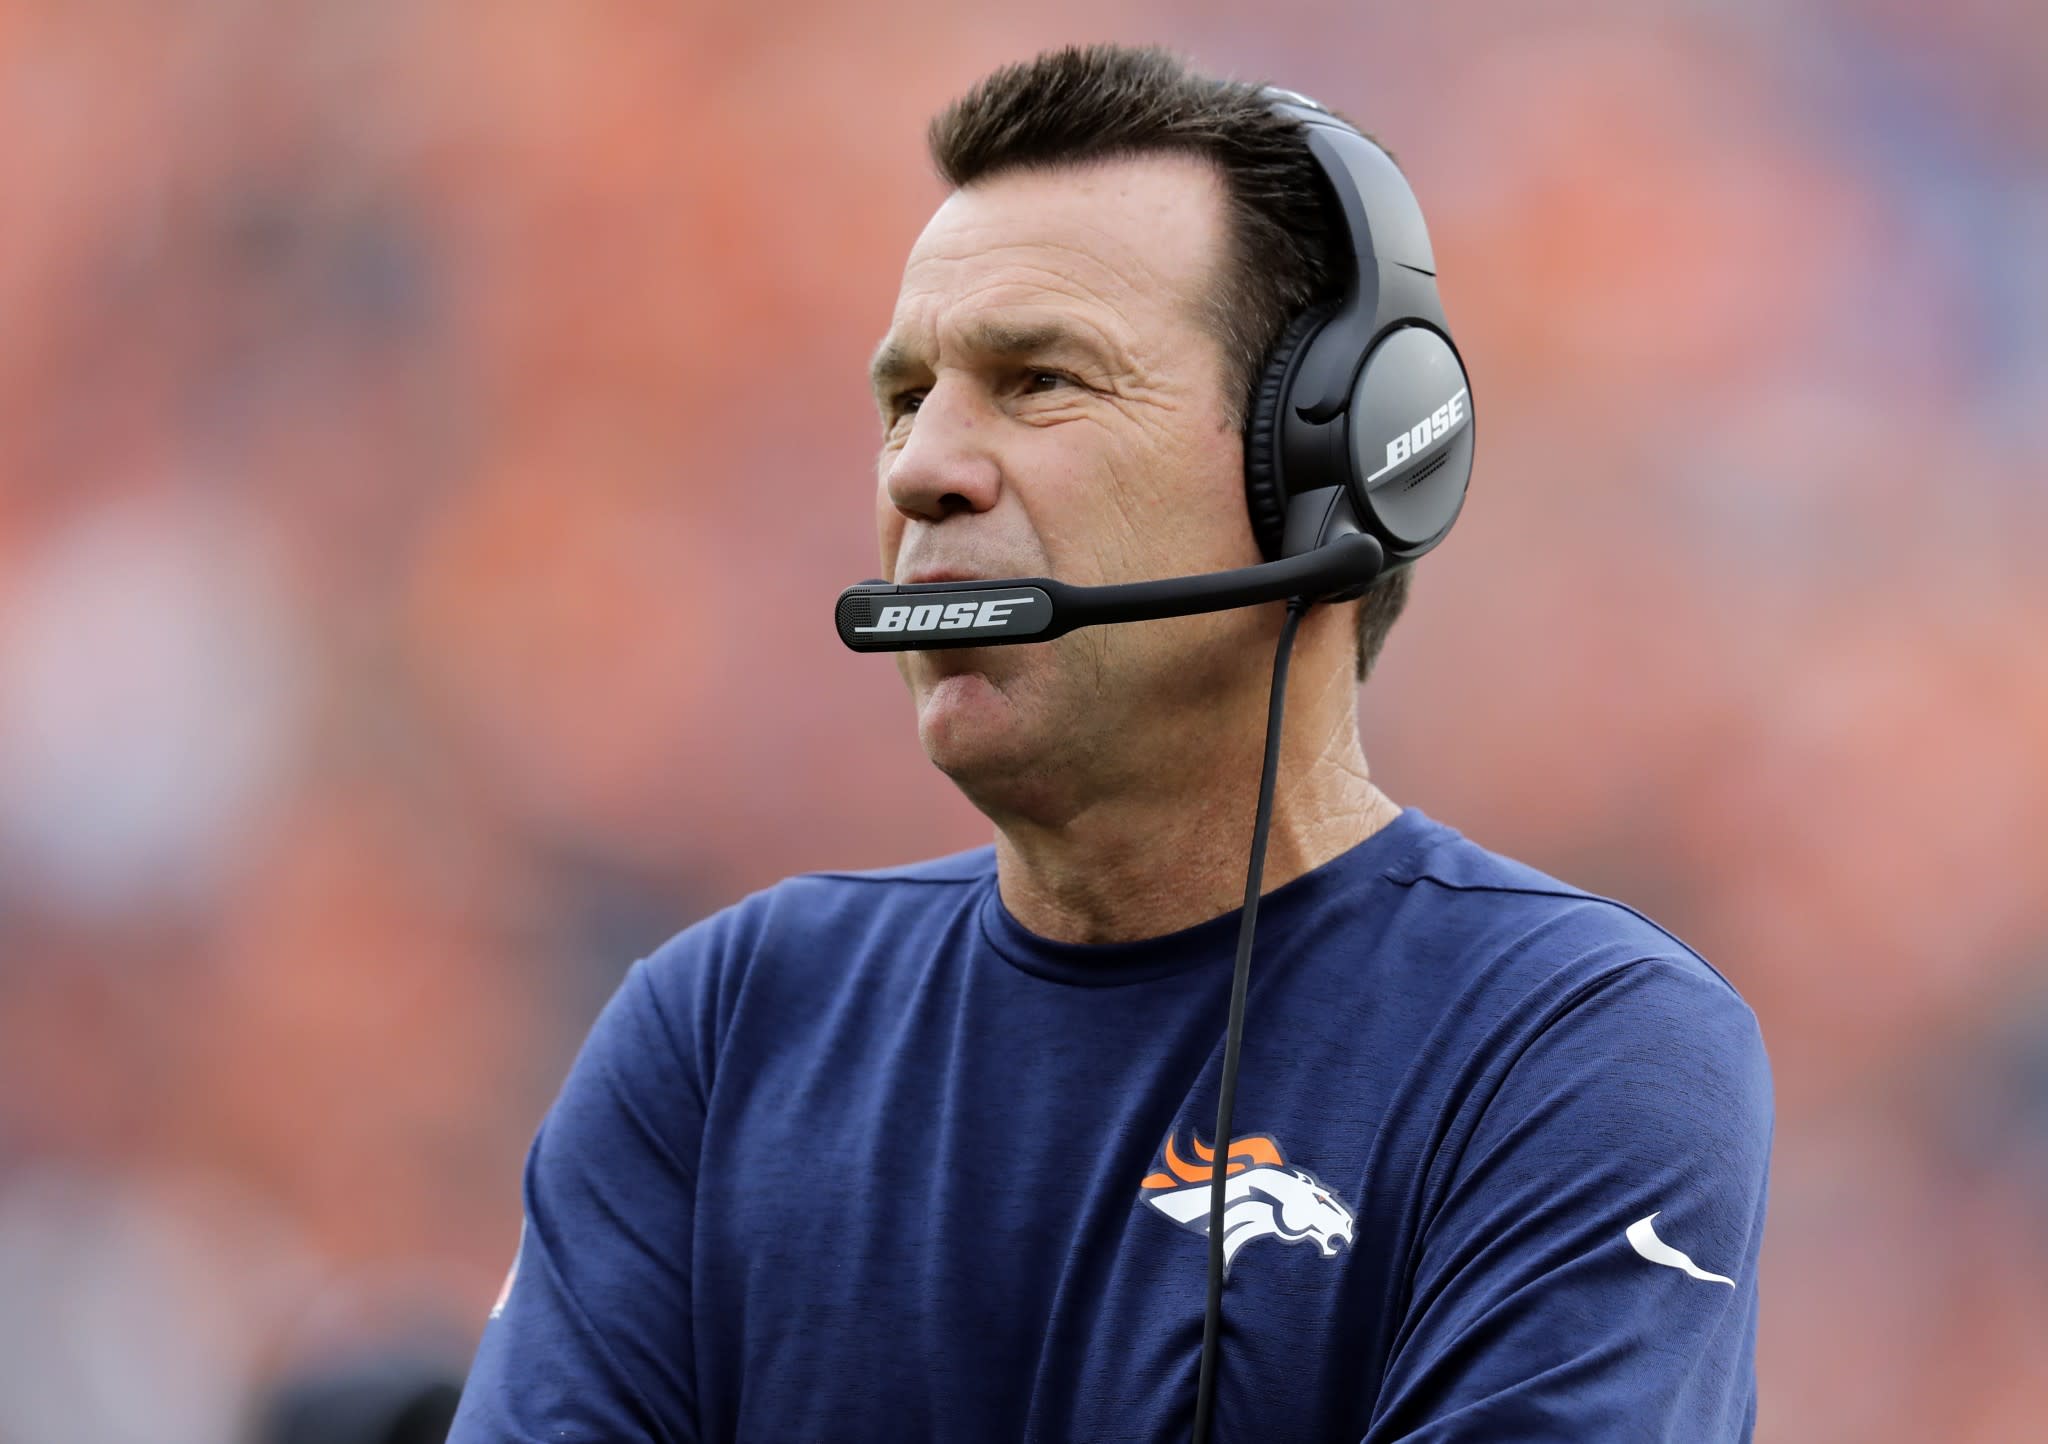 Broncos announce that coach Gary Kubiak stepping down following health concerns